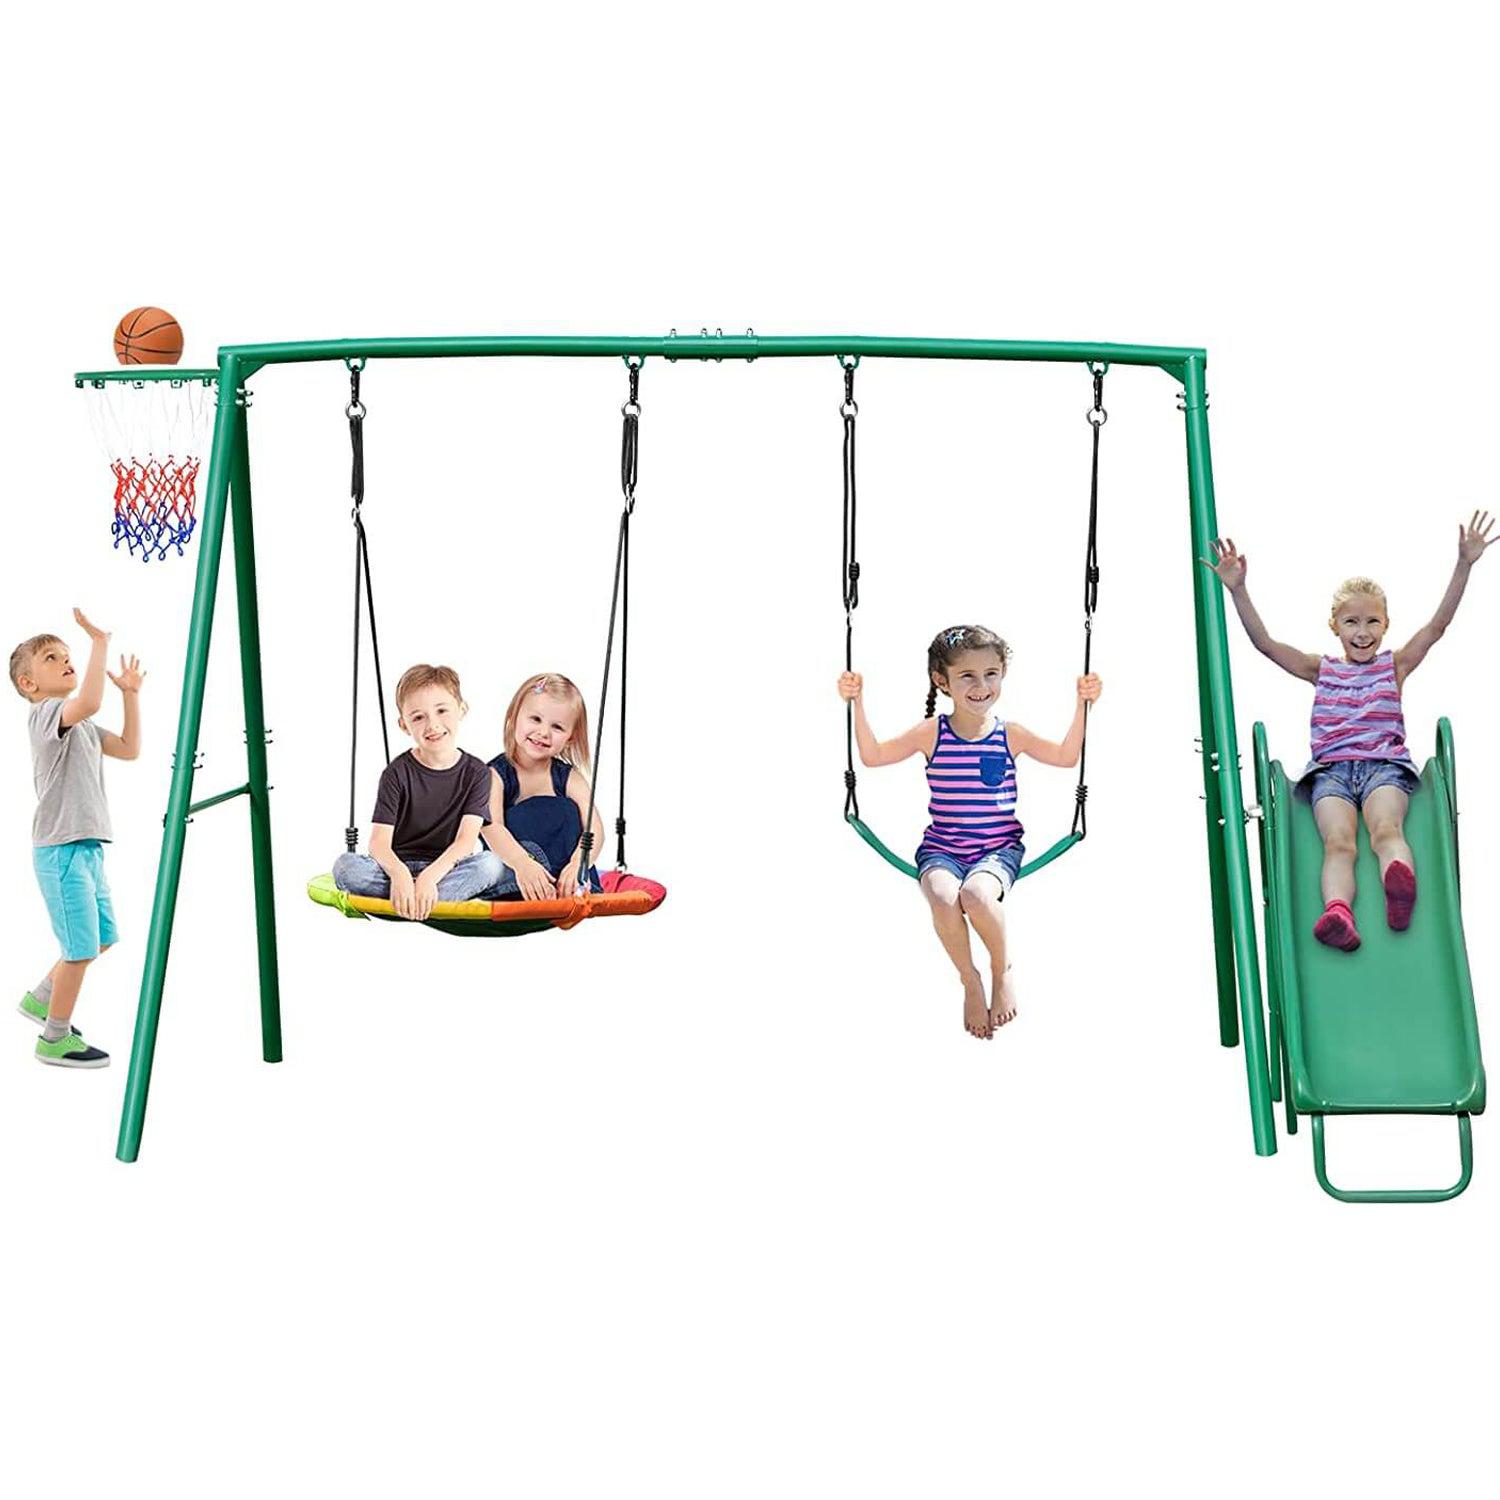 Swing Sets for Backyard with Slide, Metal Swing Stand, Saucer Swing, Belt Swing,Basketball Hoop.